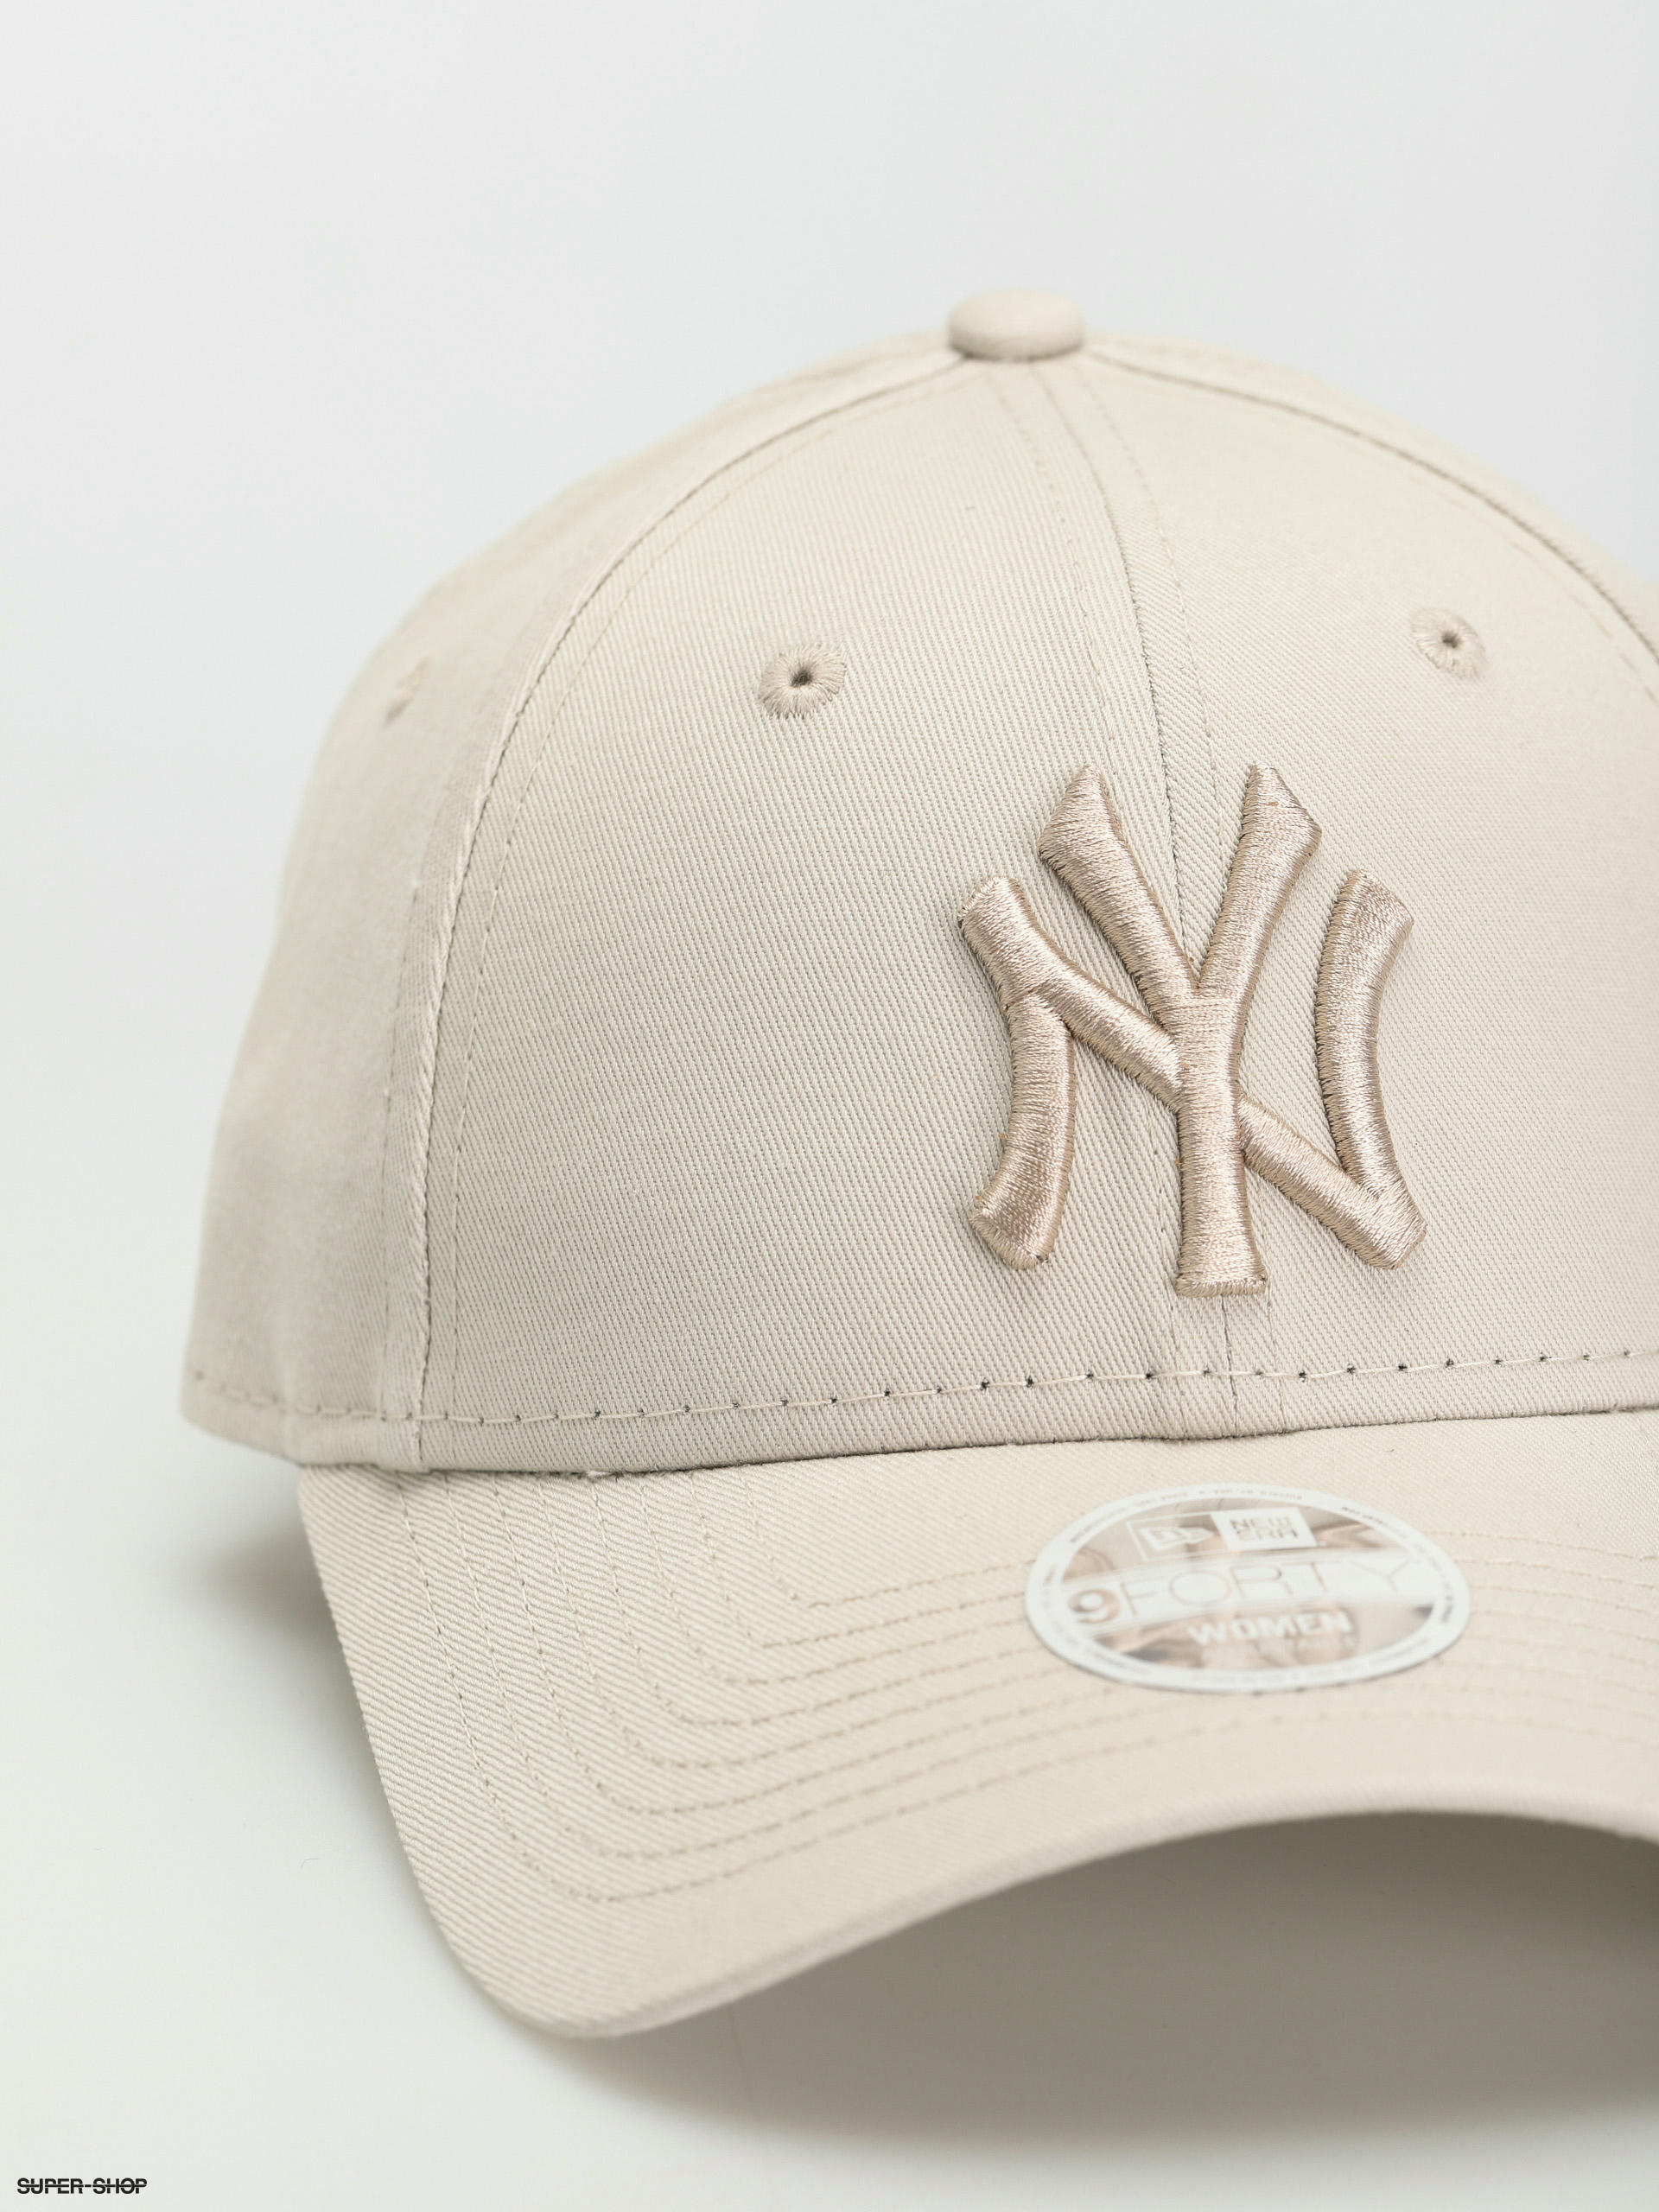 New Era 39Thirty Stretch Cap - New York Yankees Stone Beige